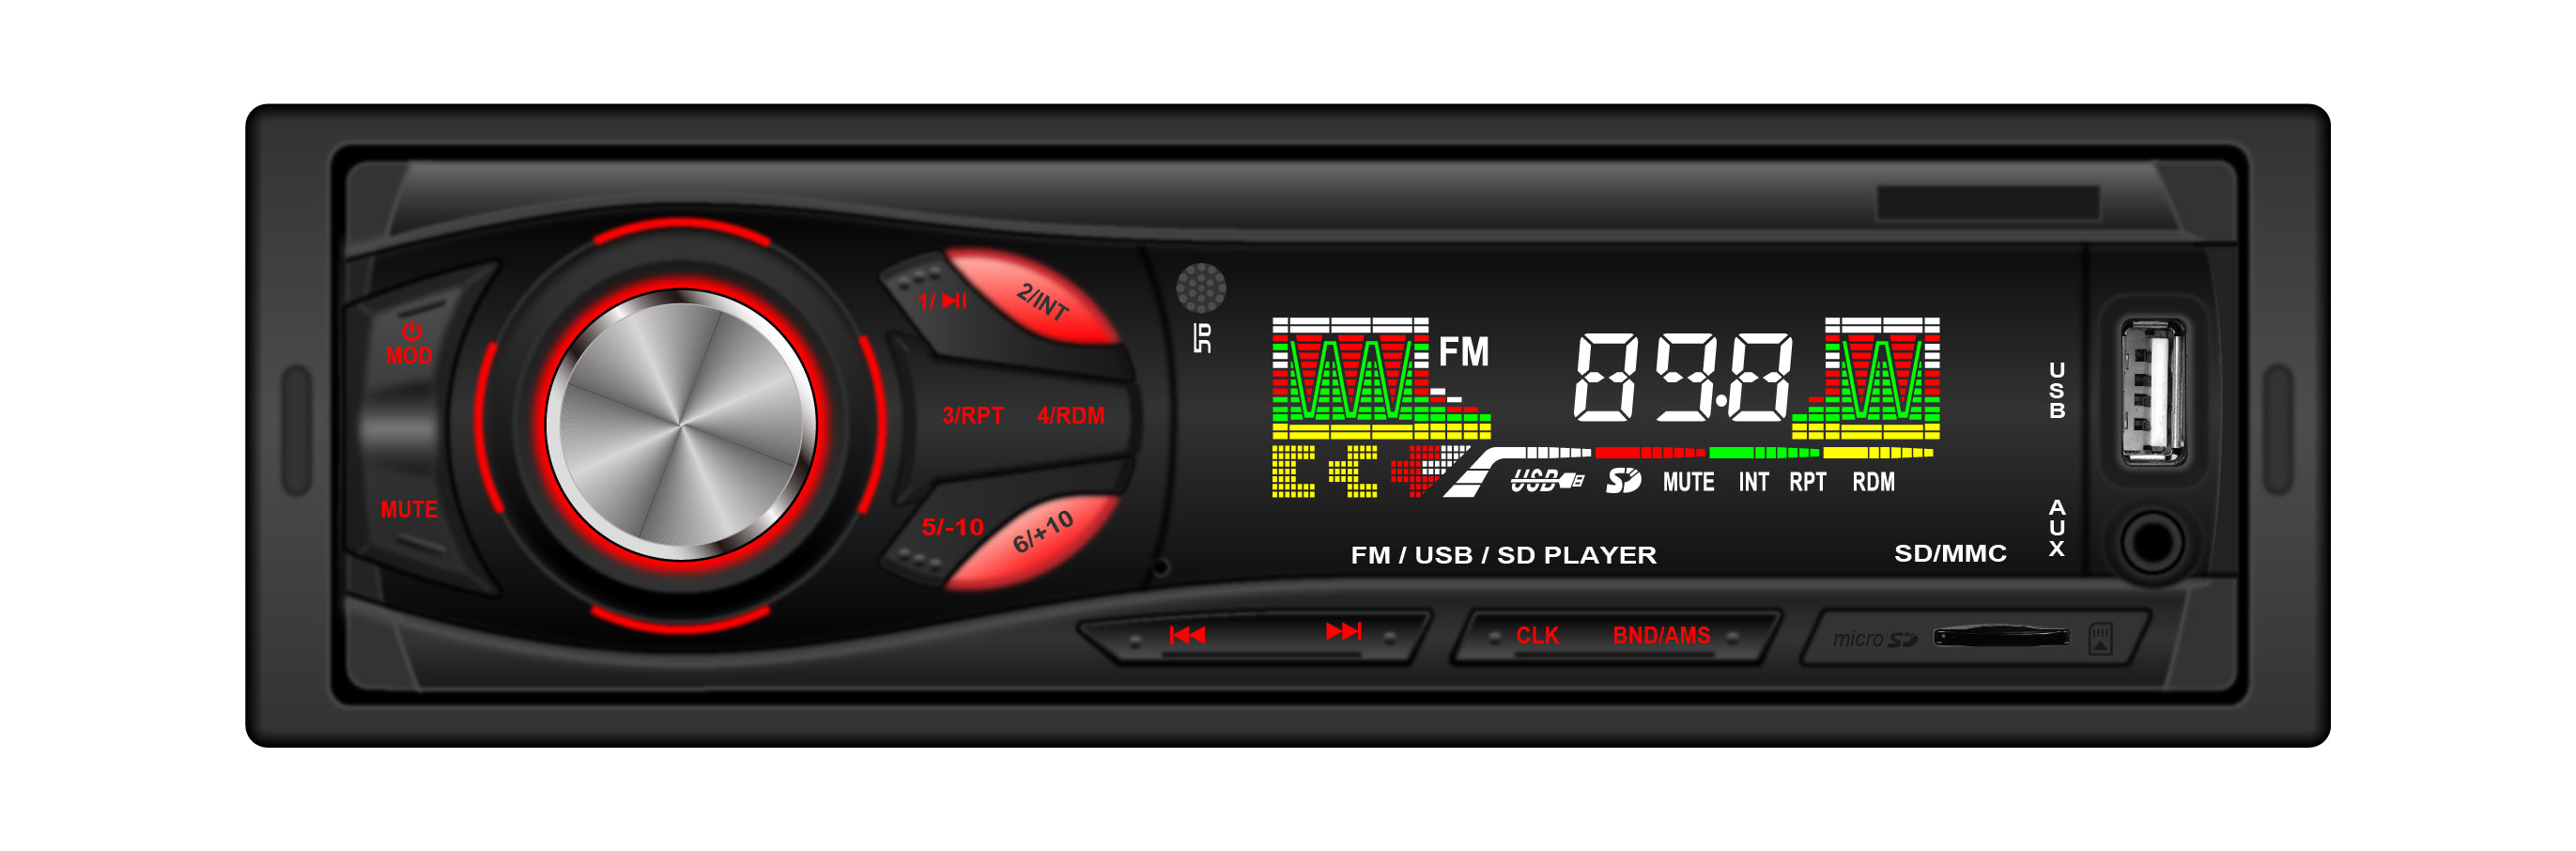 Car player panel